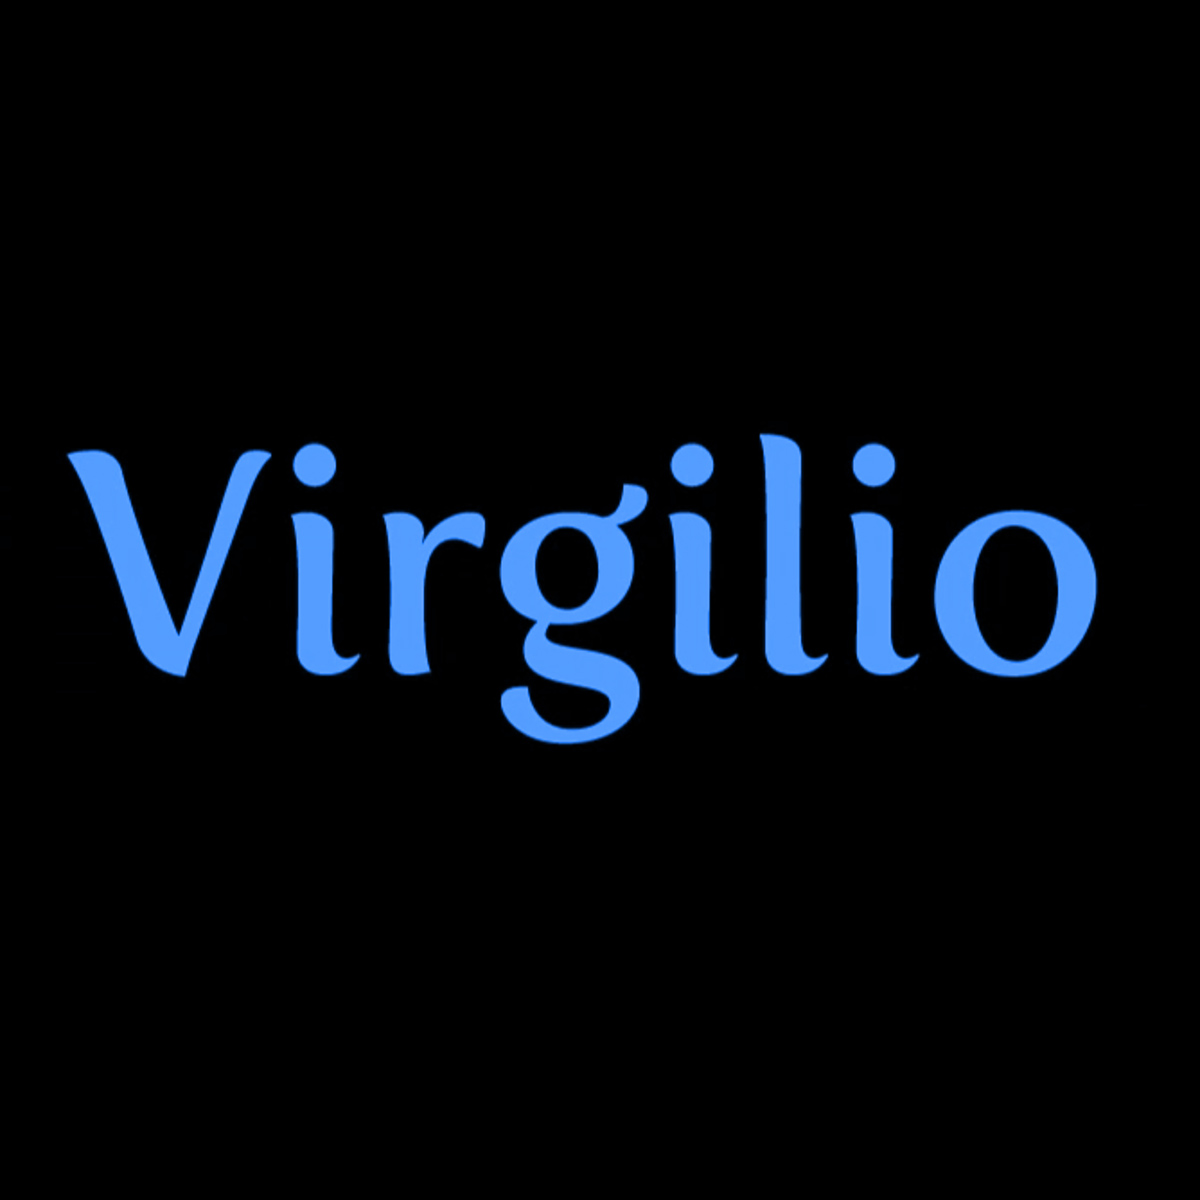 Virgilio logo